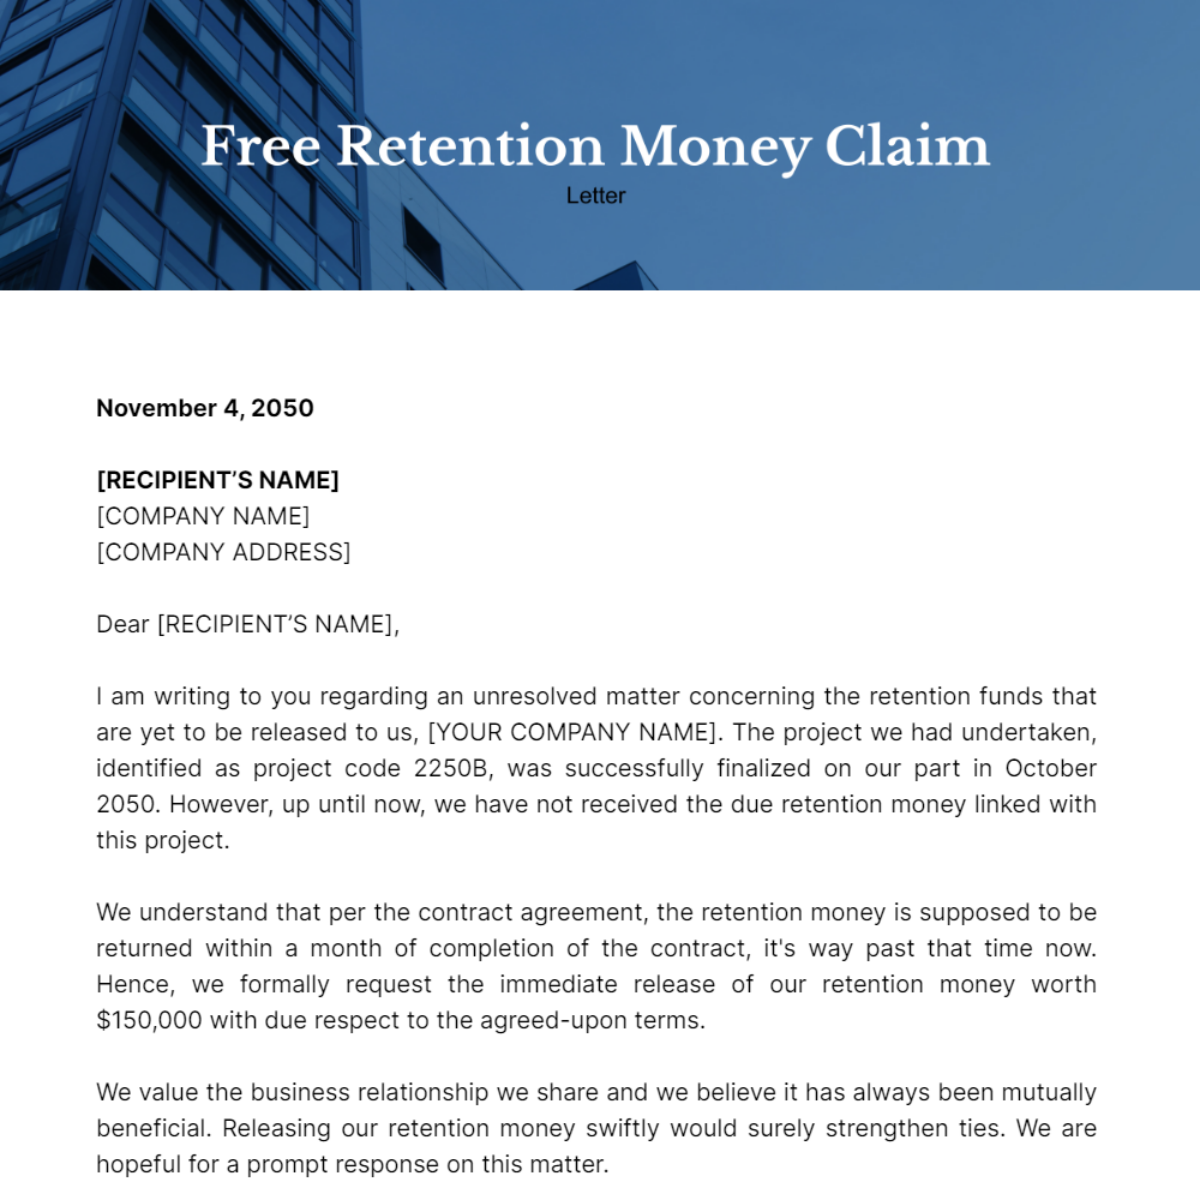 Free Retention Money Claim Letter Template